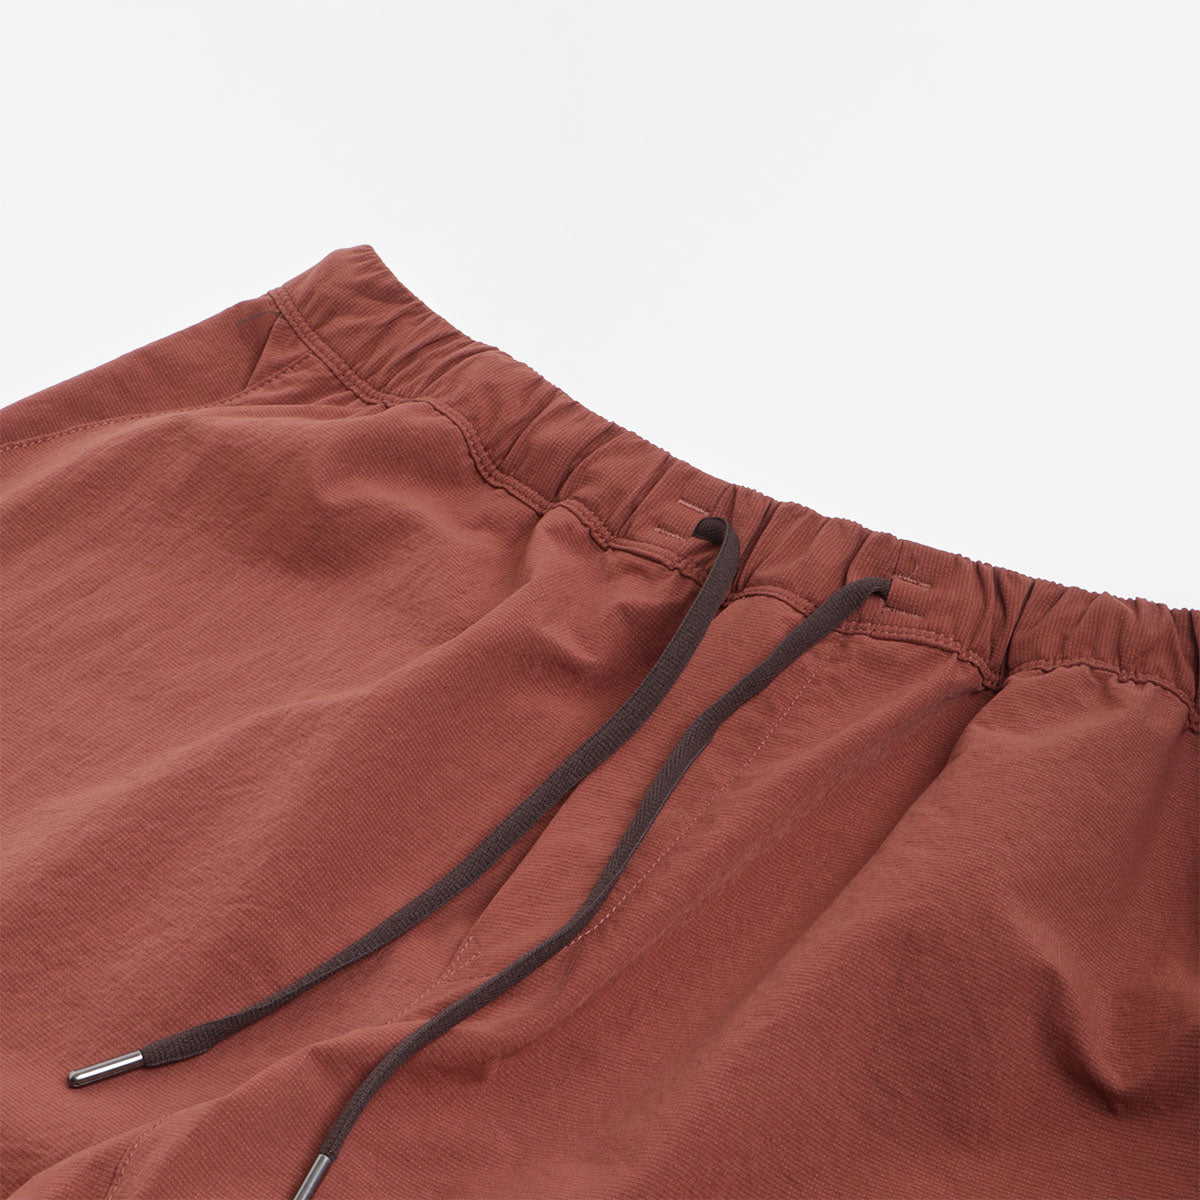 Nanga Dot Air Comfy Shorts, Brown, Detail Shot 2